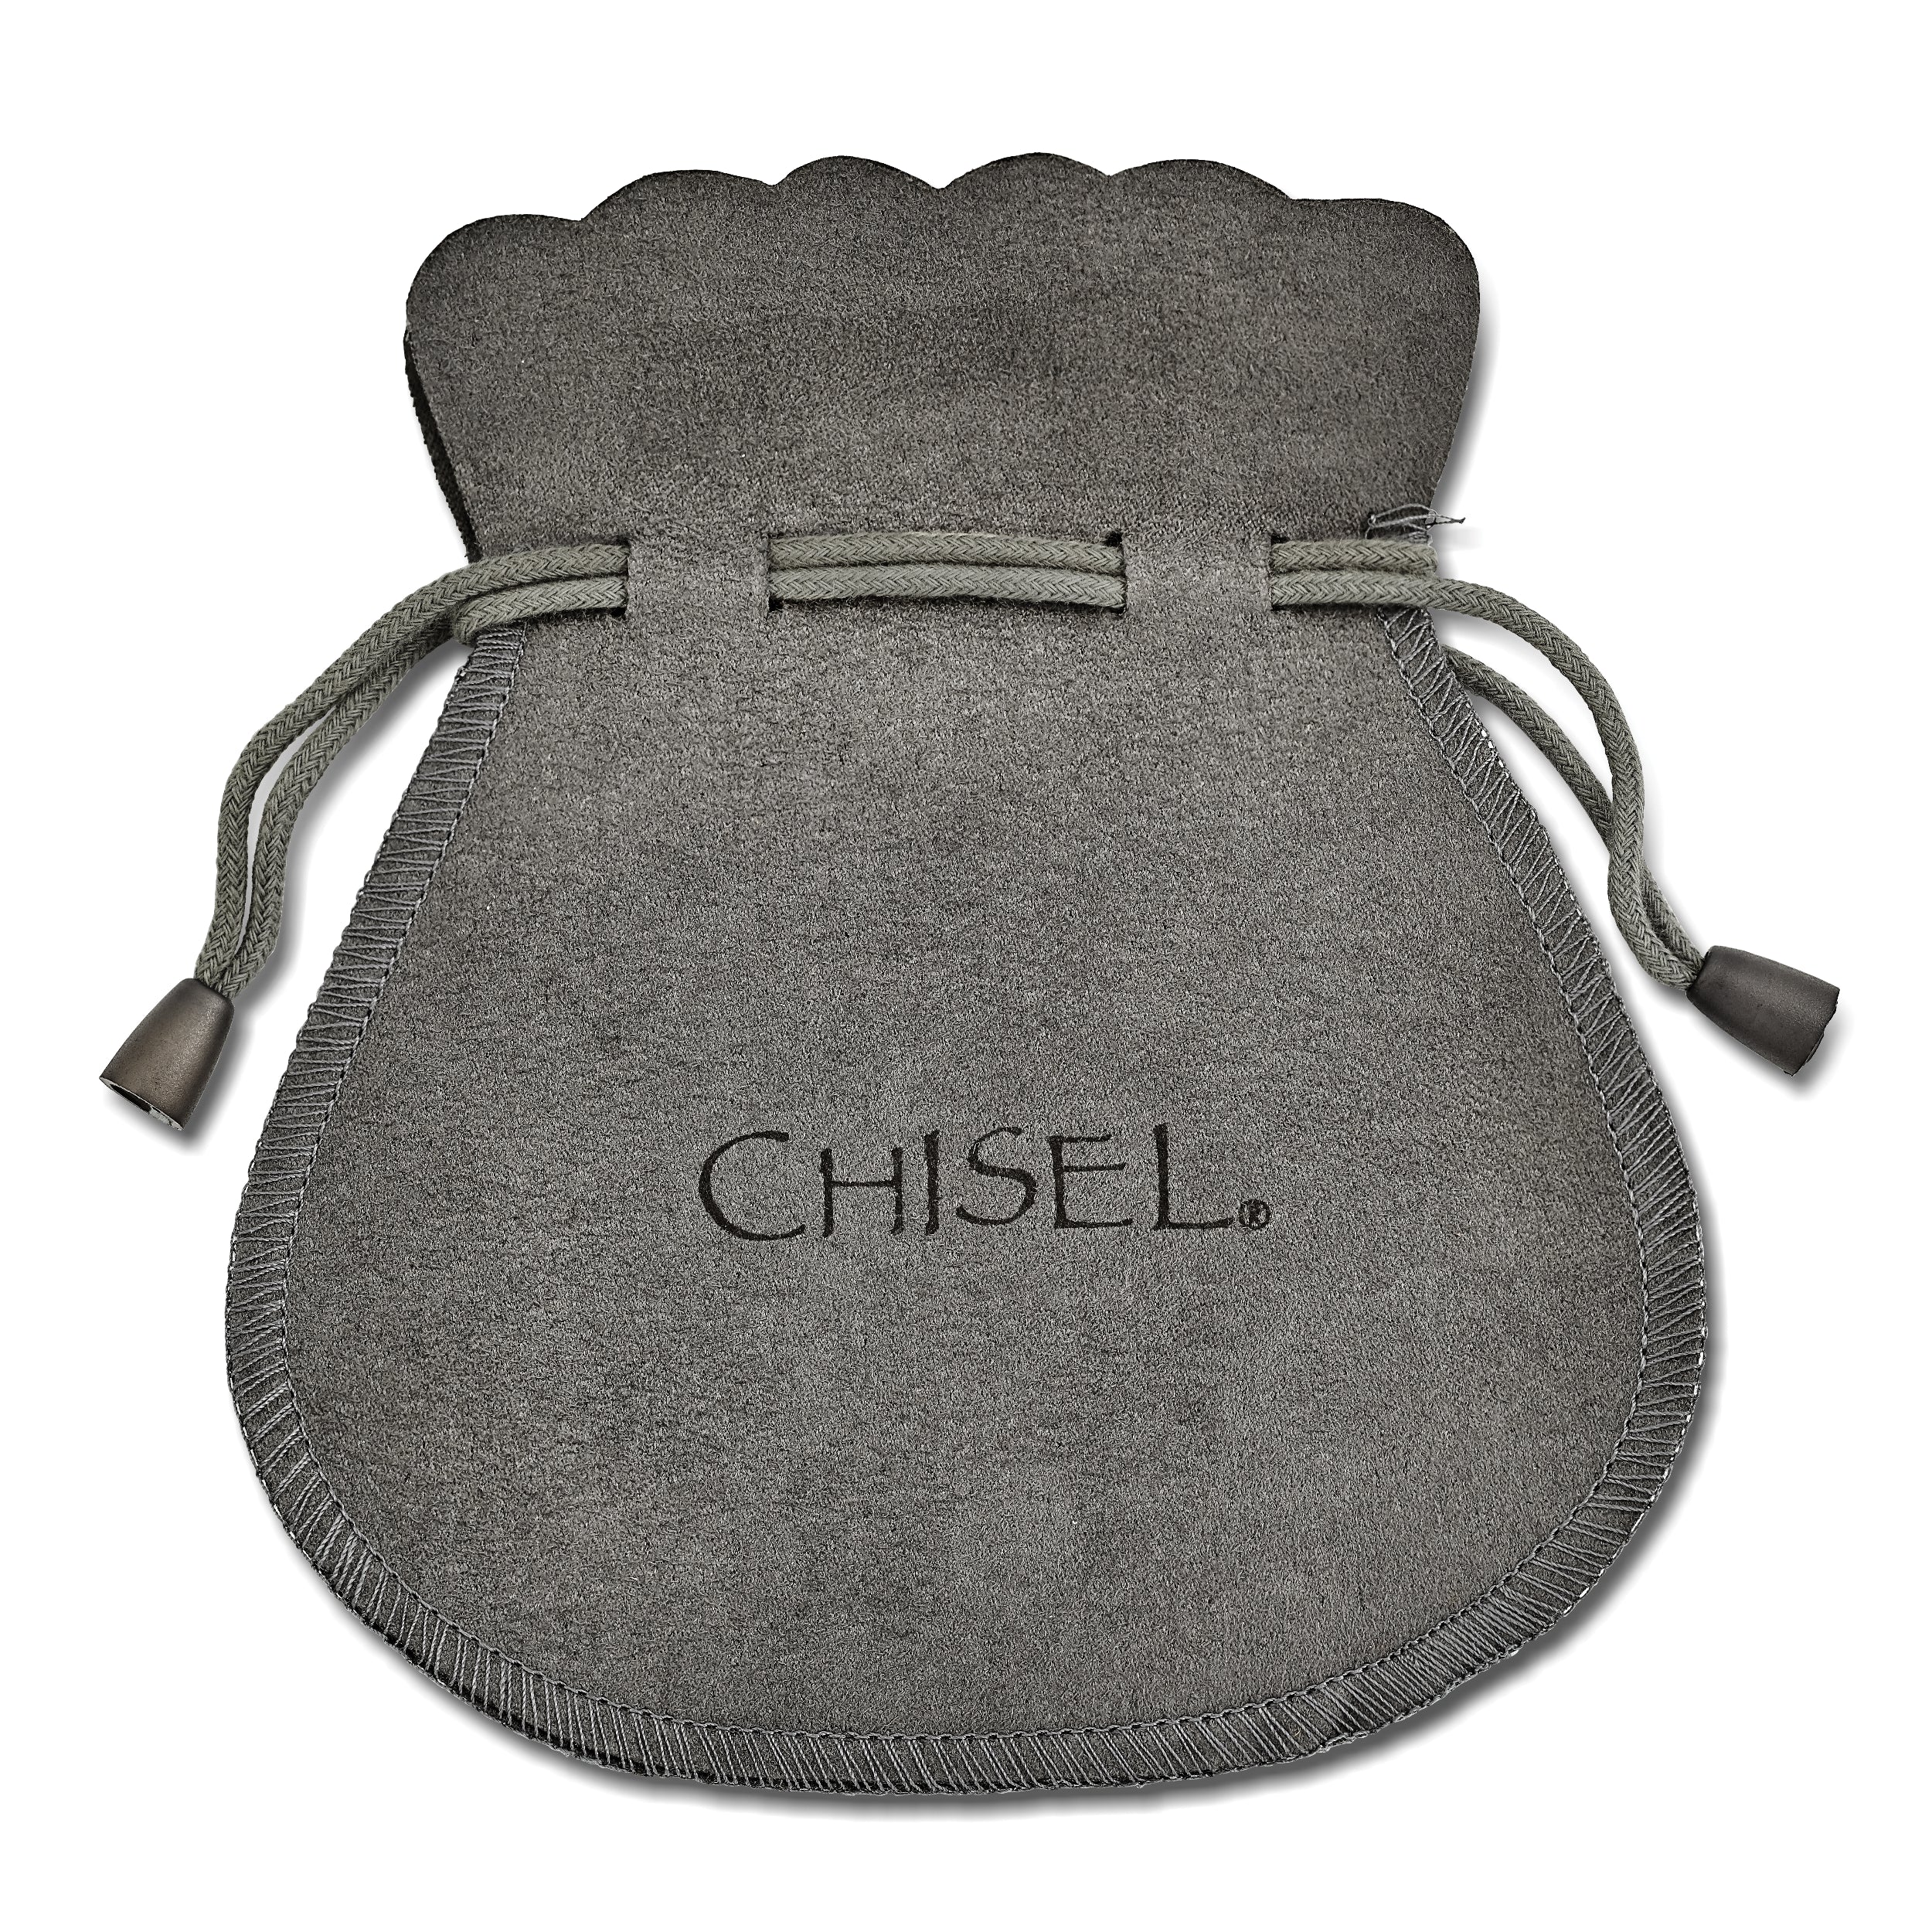 Chisel Stainless Steel Polished with Enameled Koa Wood Inlay Cuff Bangle